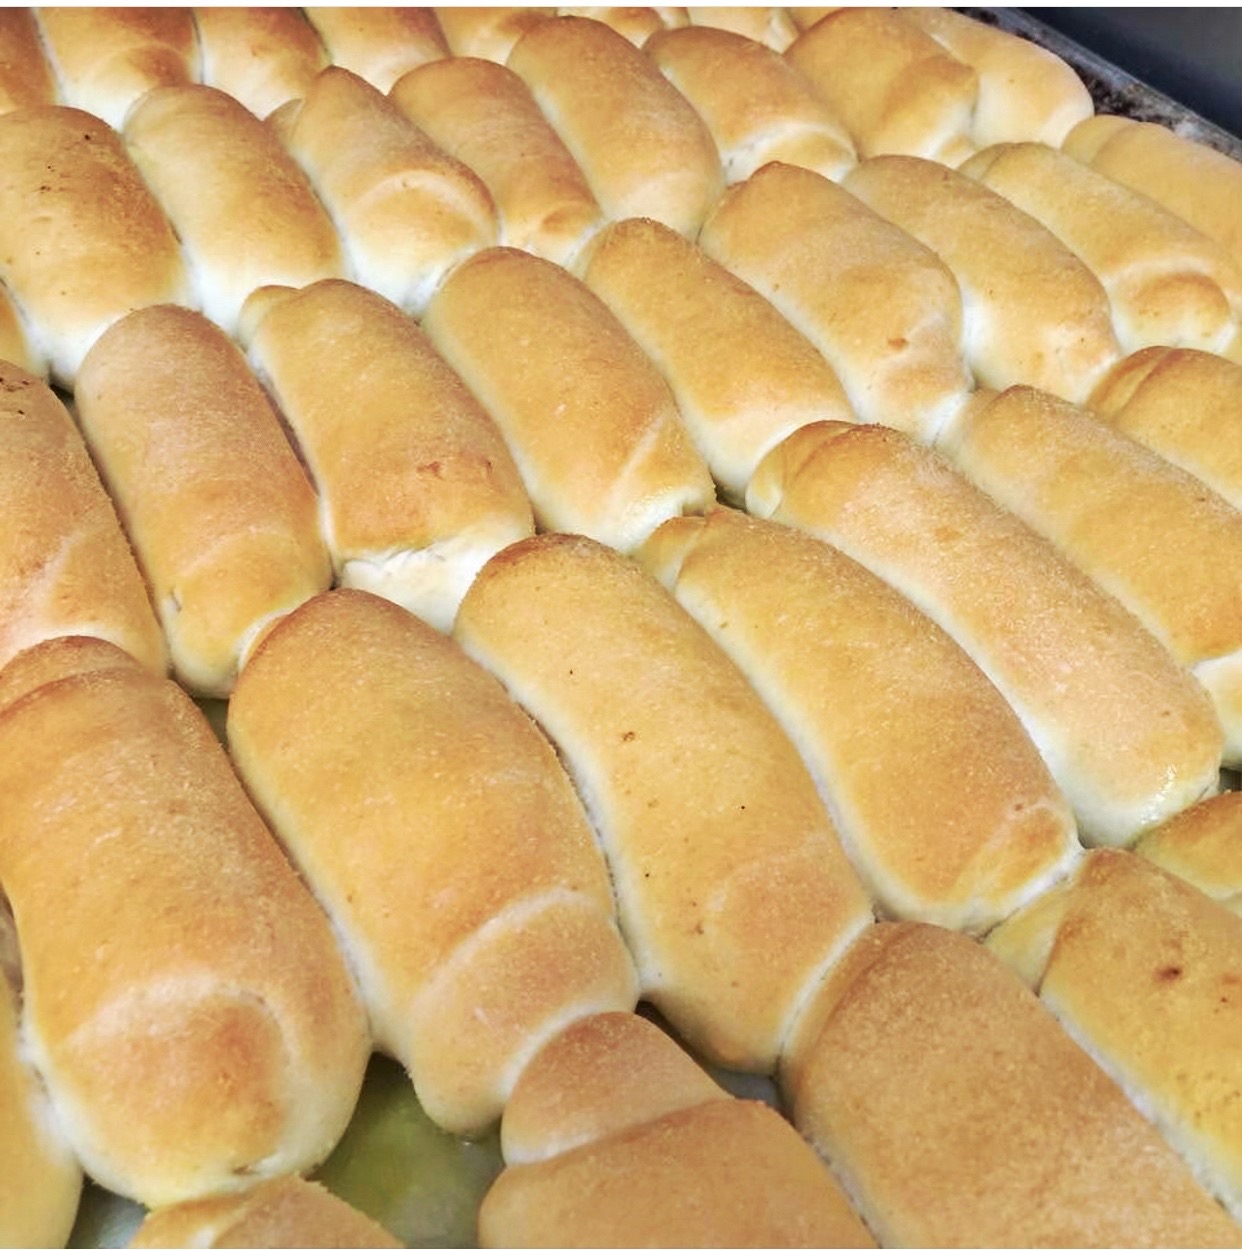 A batch of fresh bread roles.